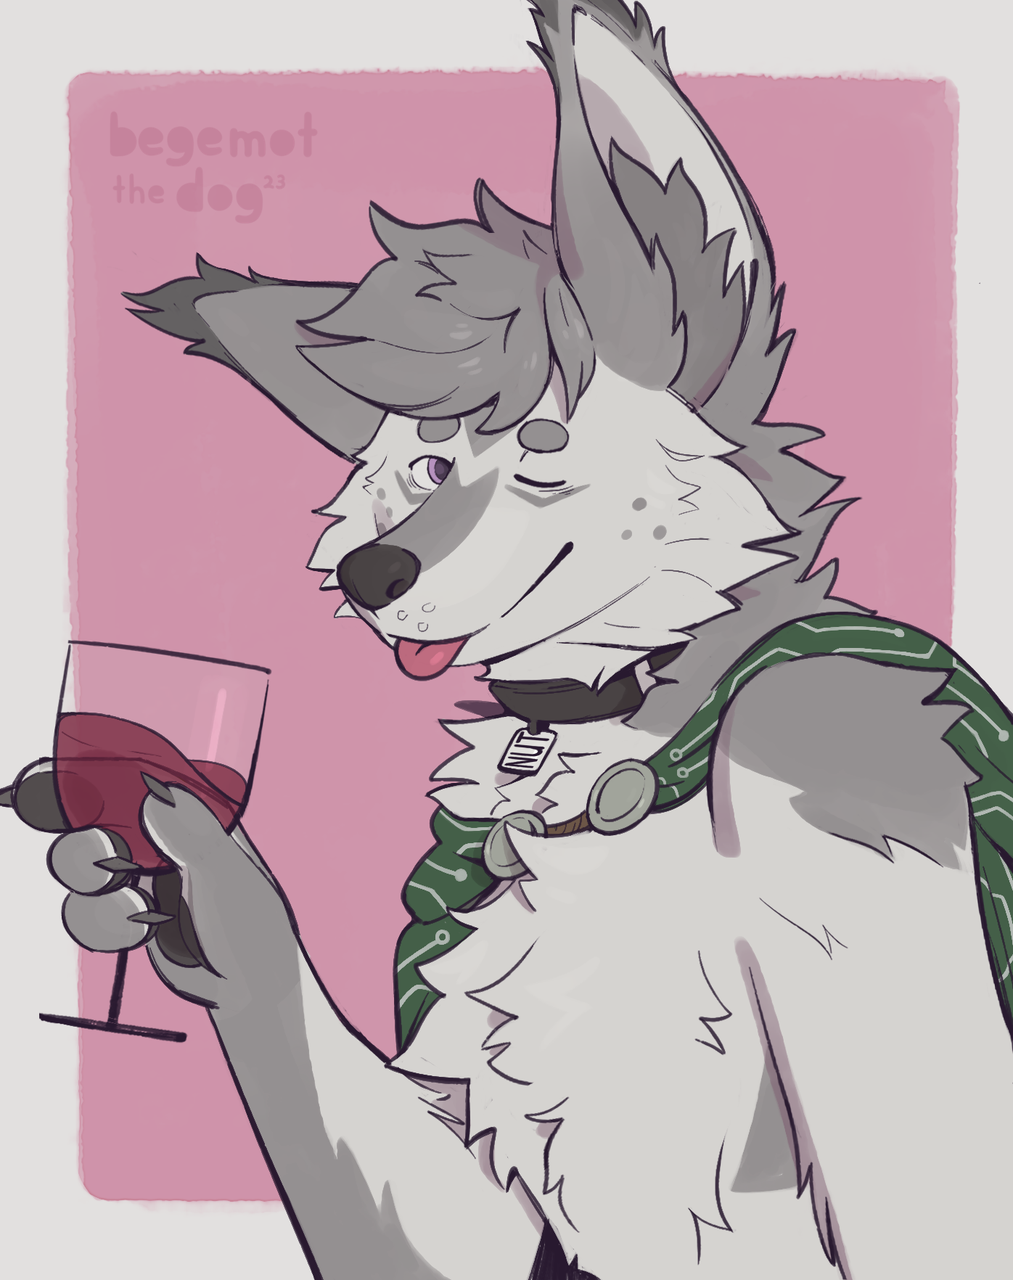 Some wine?🍷